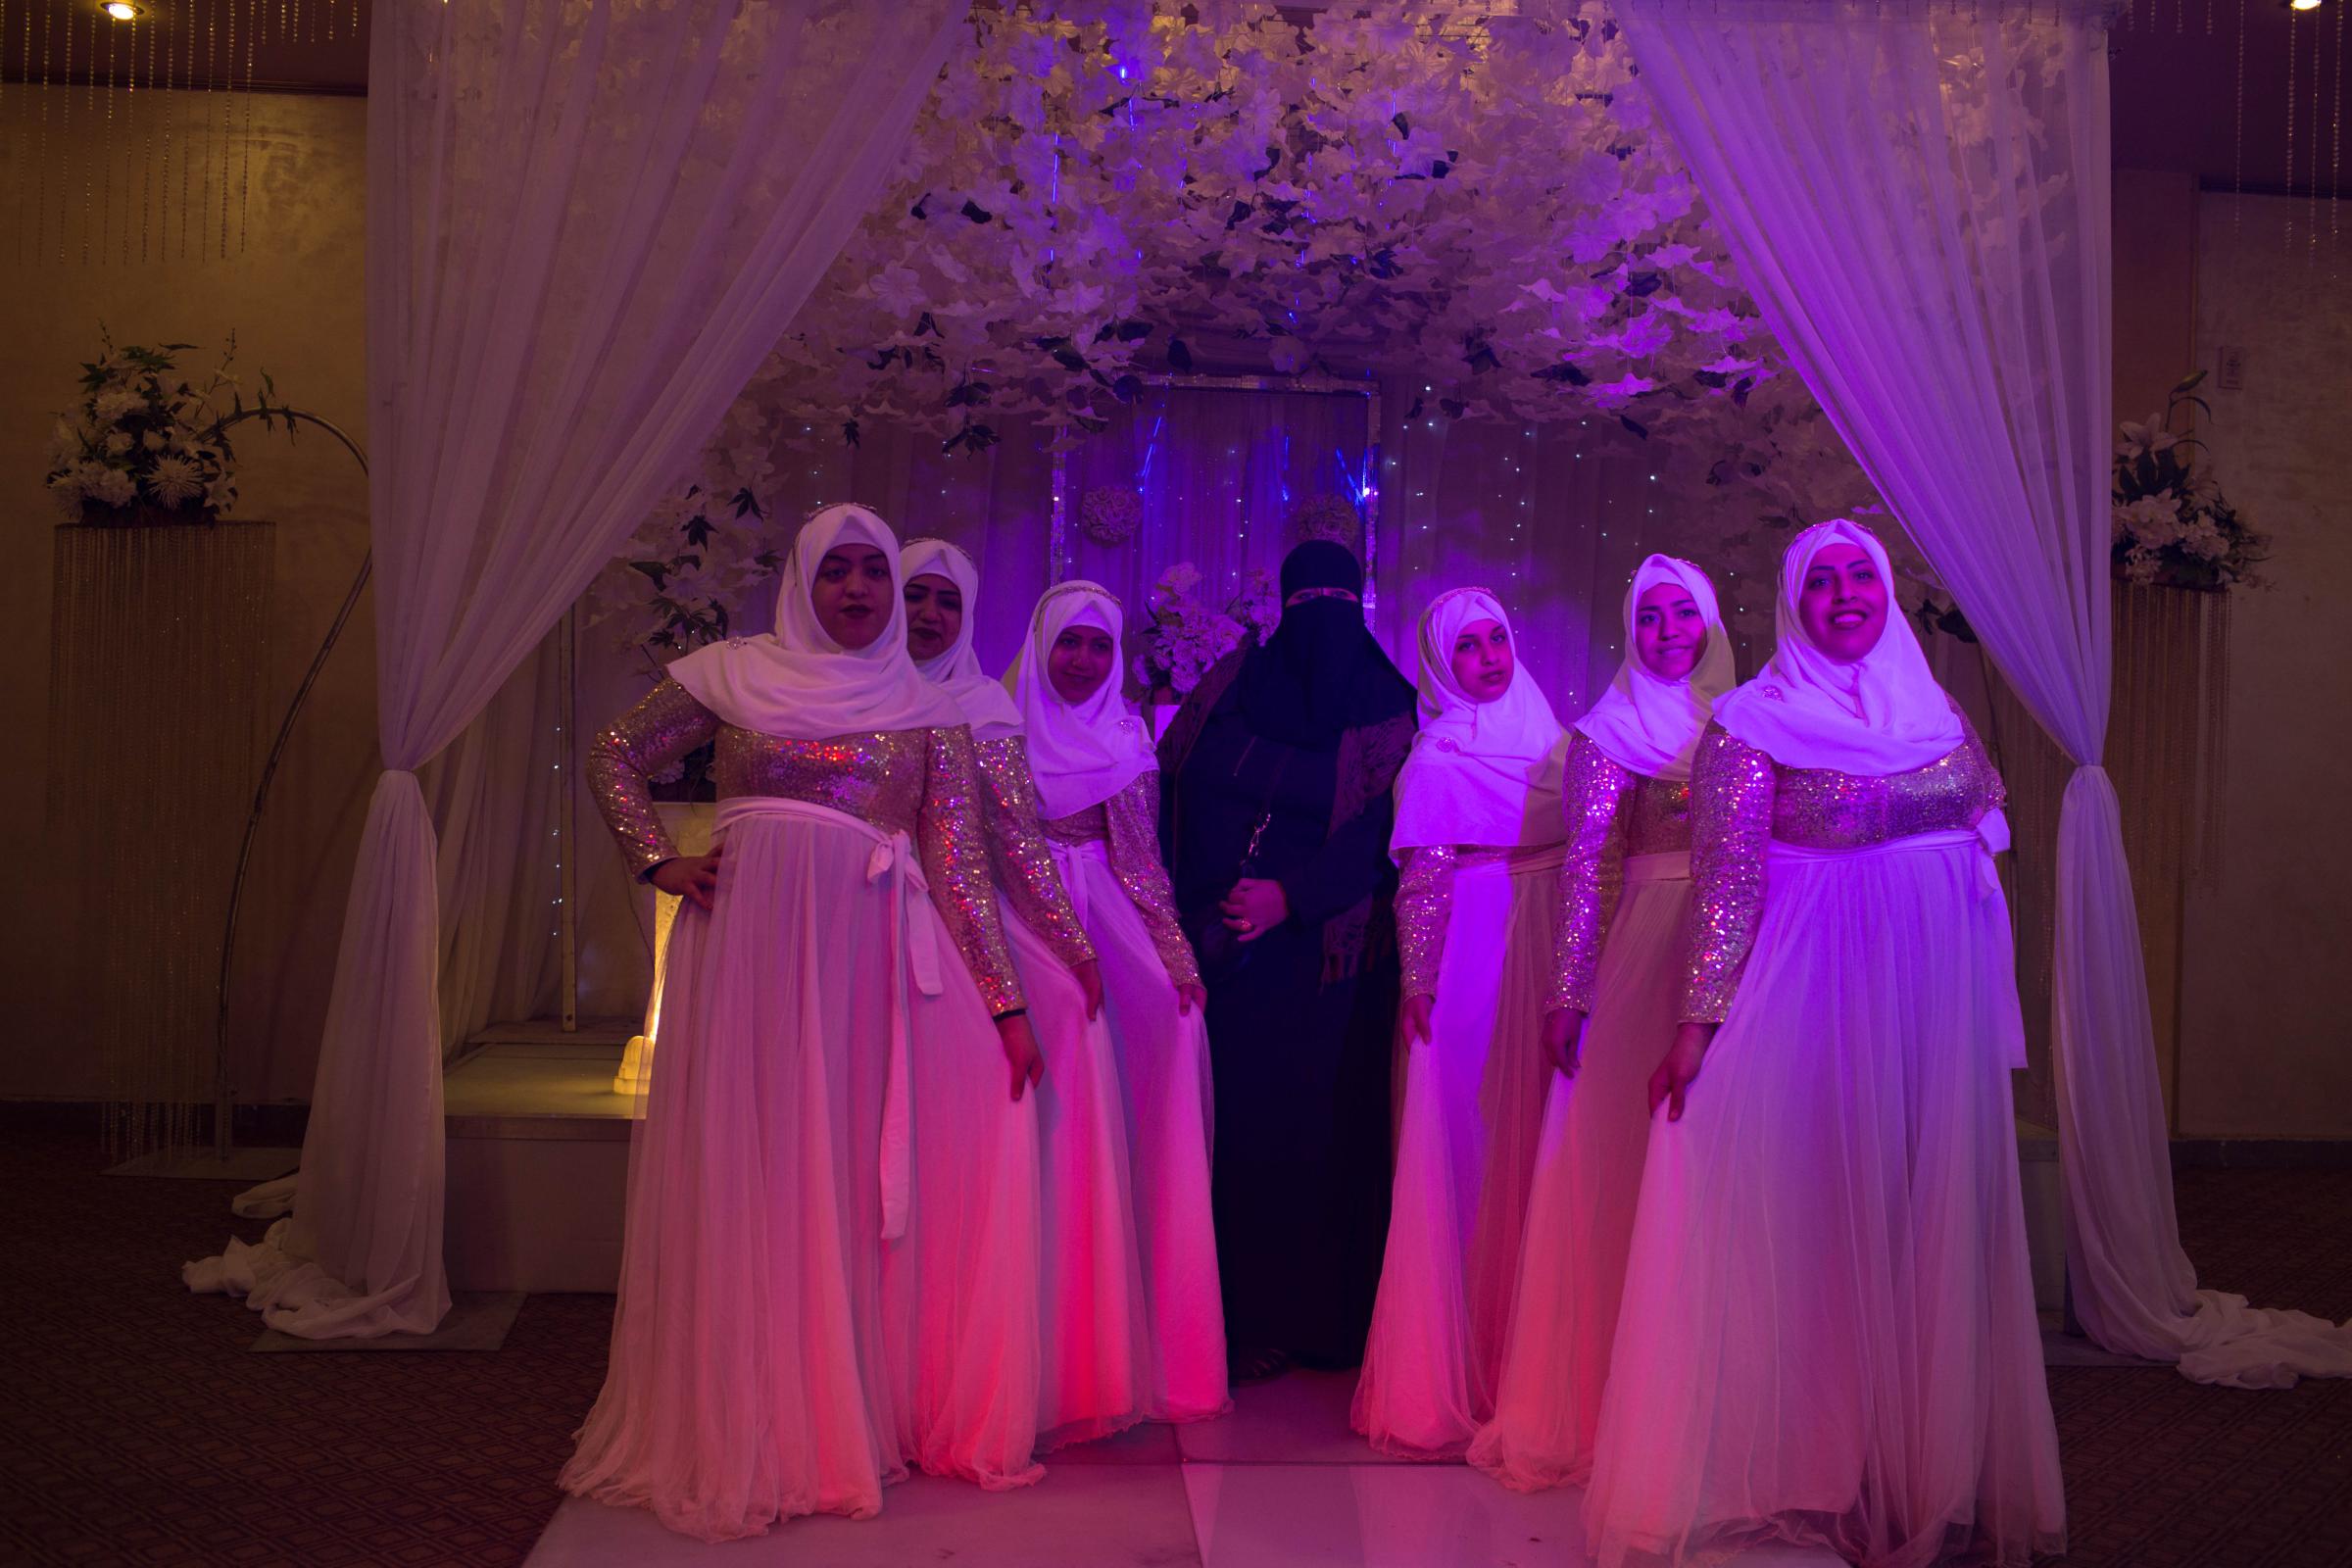 Islamic women's wedding band - 